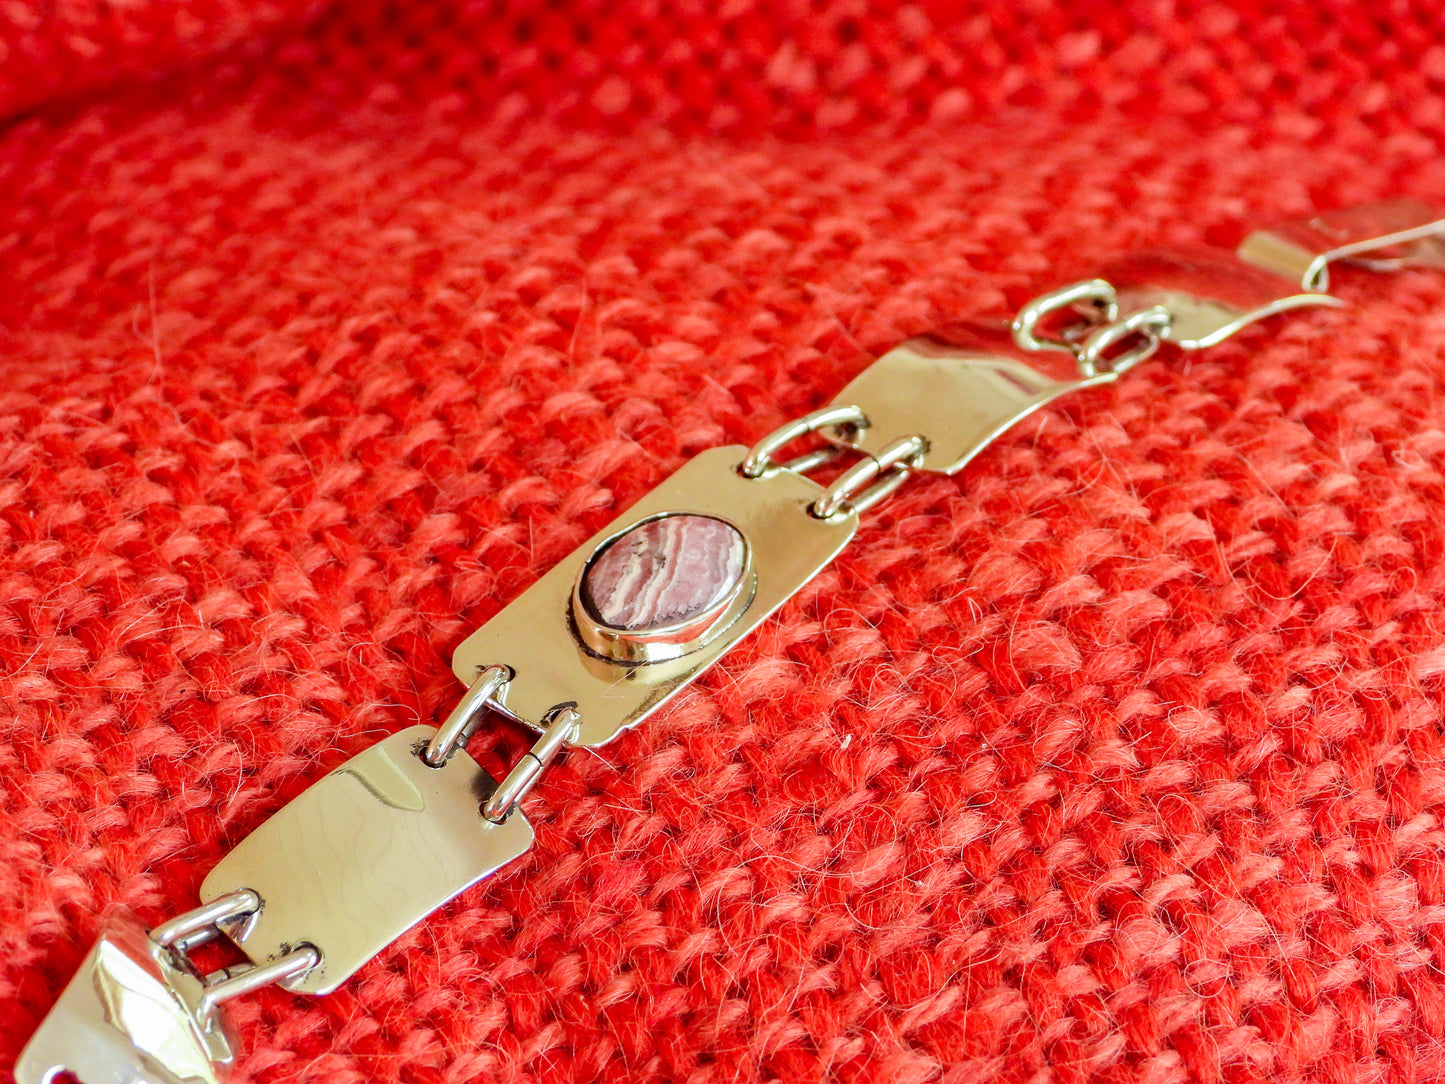 PIEDRAS Bracelet design decorated with stones